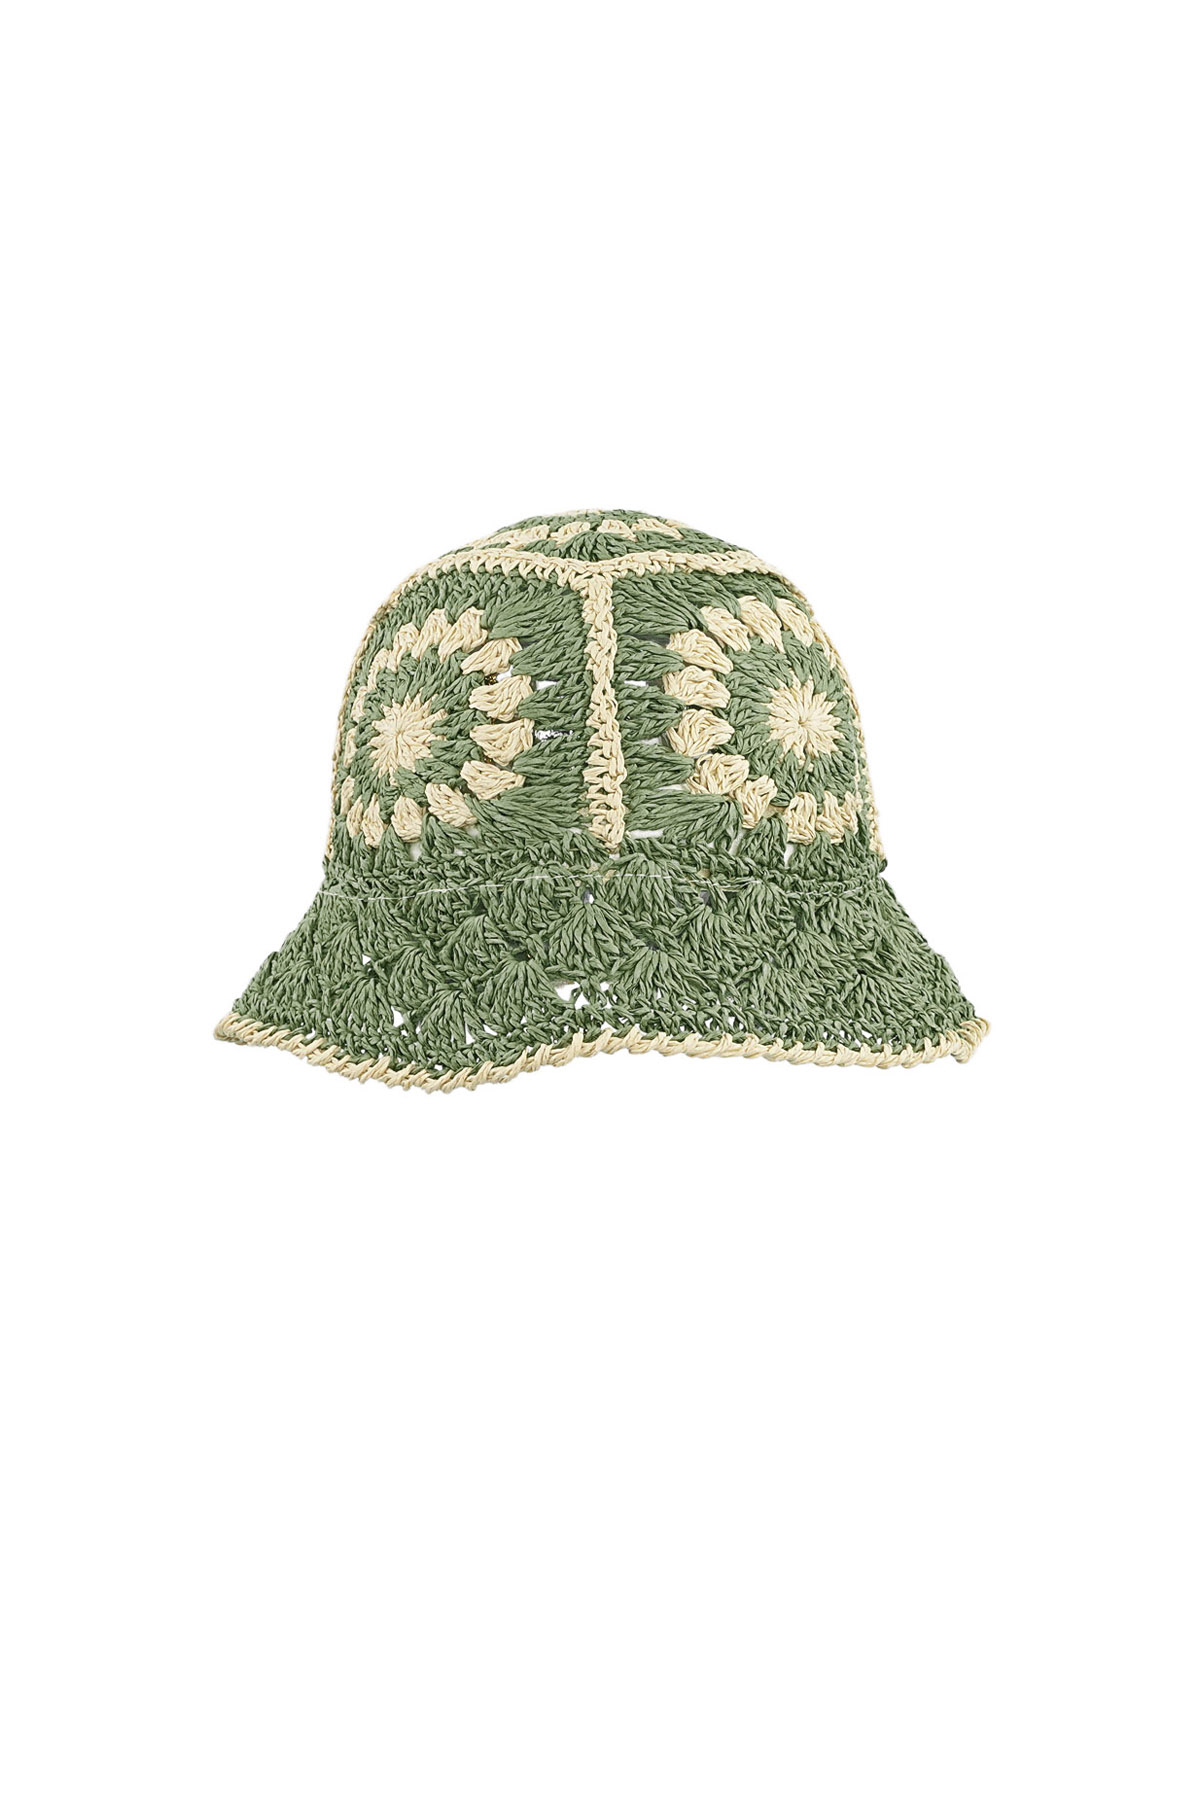 Crochet hat with flowers - dark green 